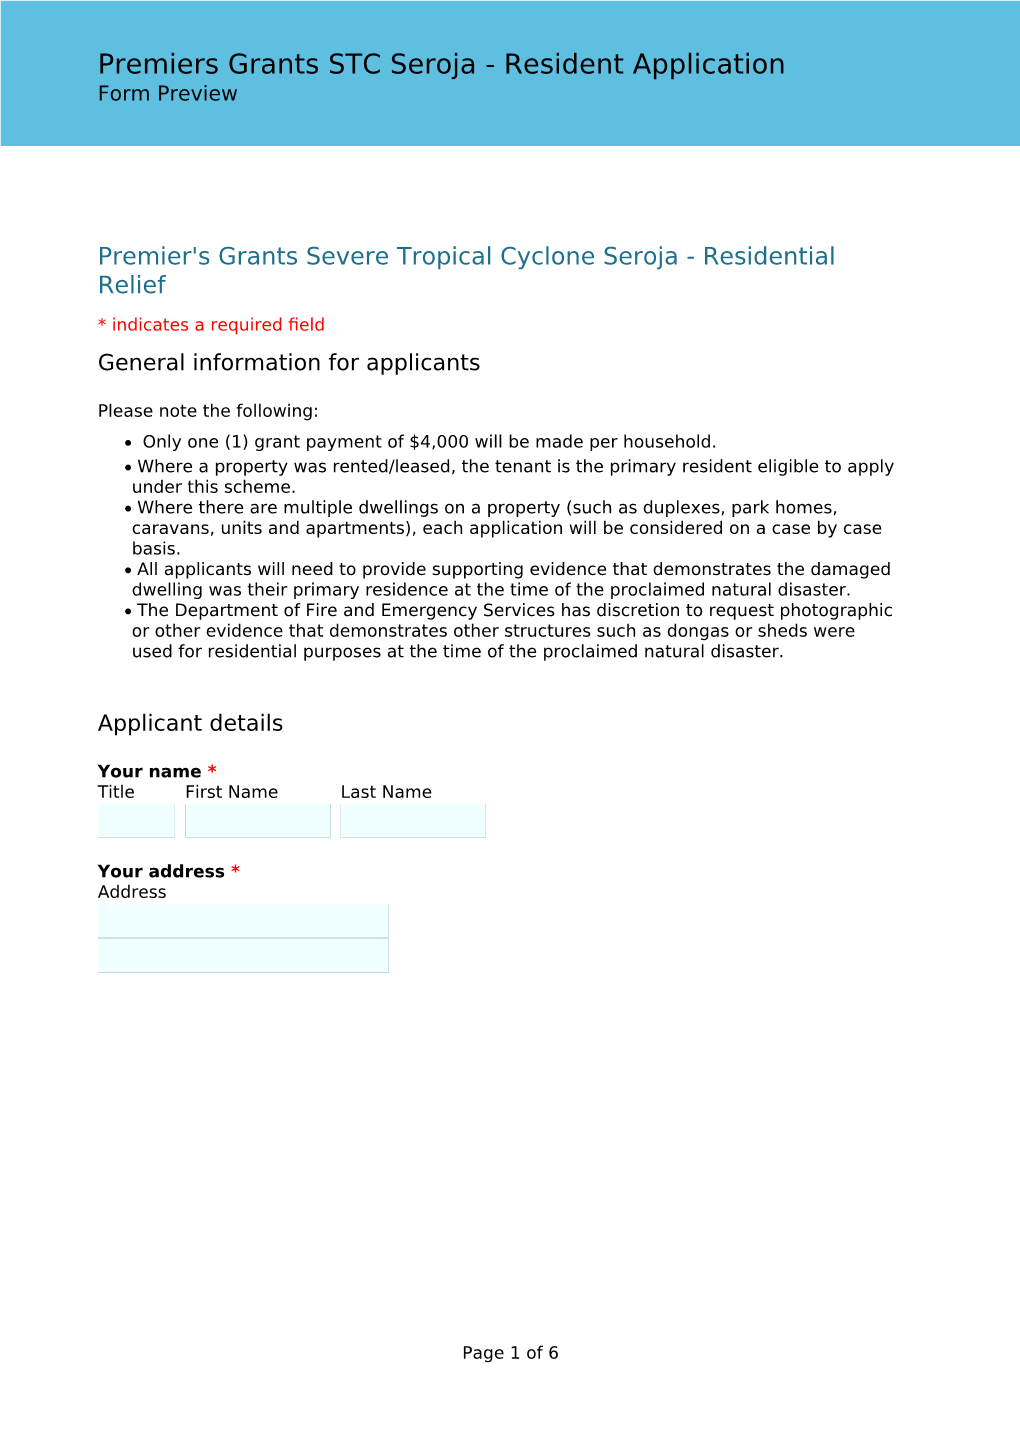 Premiers Grants STC Seroja - Resident Application Form Preview